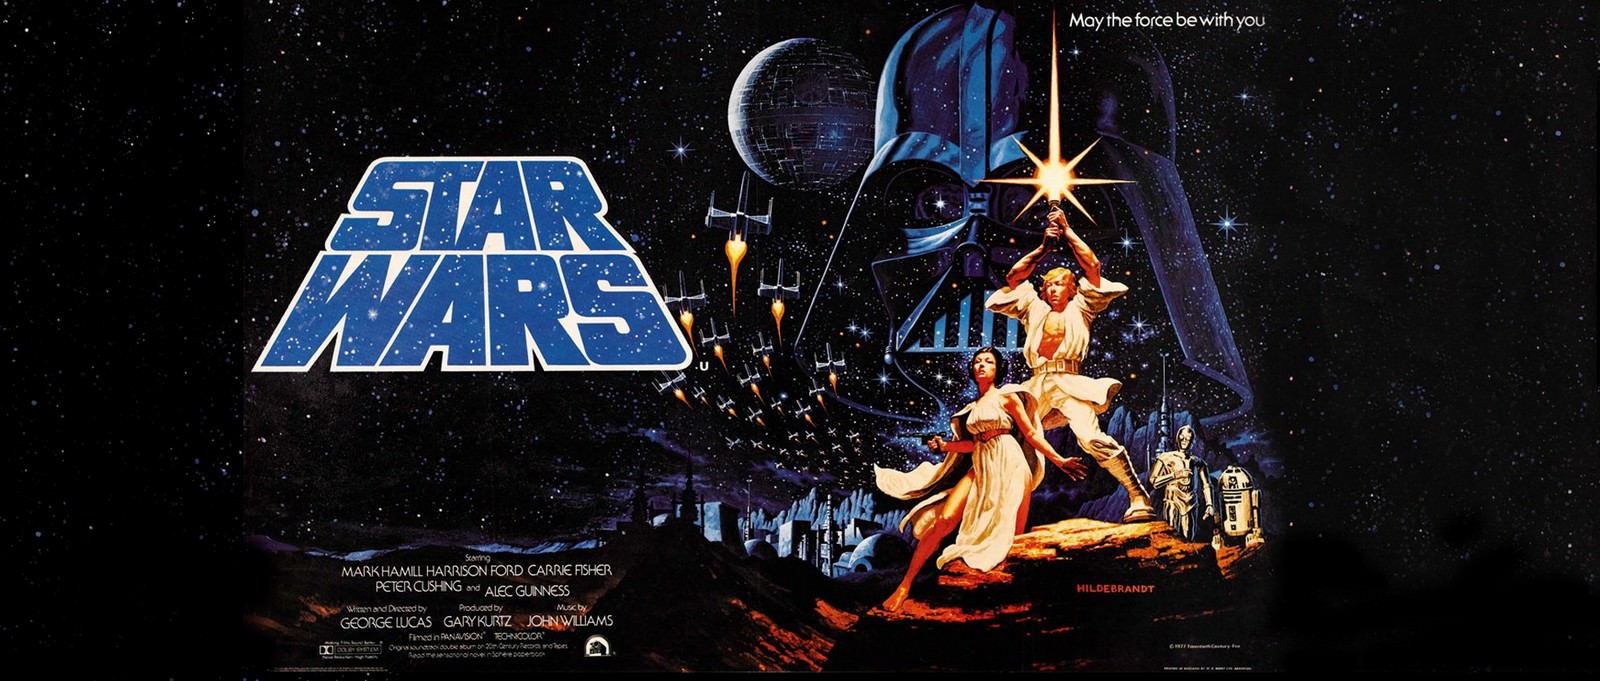 Movie, Star Wars Episode IV: A New Hope(美國, 1977) / 星際大戰四部曲：曙光乍現(台灣) / 星球大战IV：新希望(中國) / 星球大戰：新的希望(香港), 電影海報, 美國, 橫版